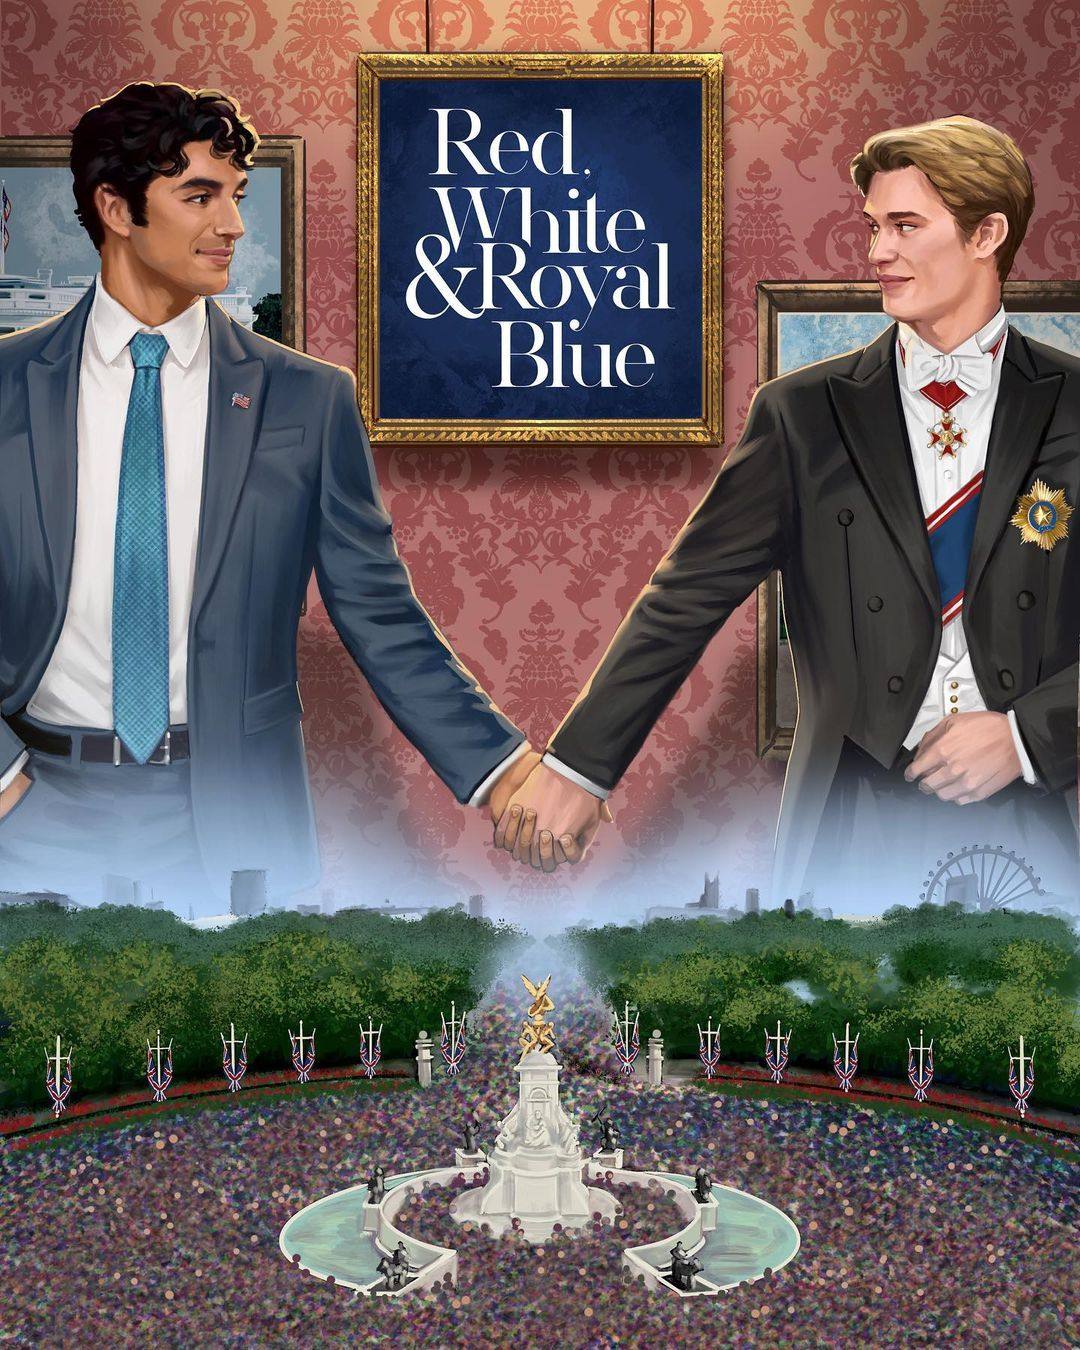 Amazon Prime’s LGBT romance film Red, White & Royal Blue is based on Casey McQuiston’s best-selling novel of the same name. Photos: @rwrbonprime, @vkelleyart/Instagram